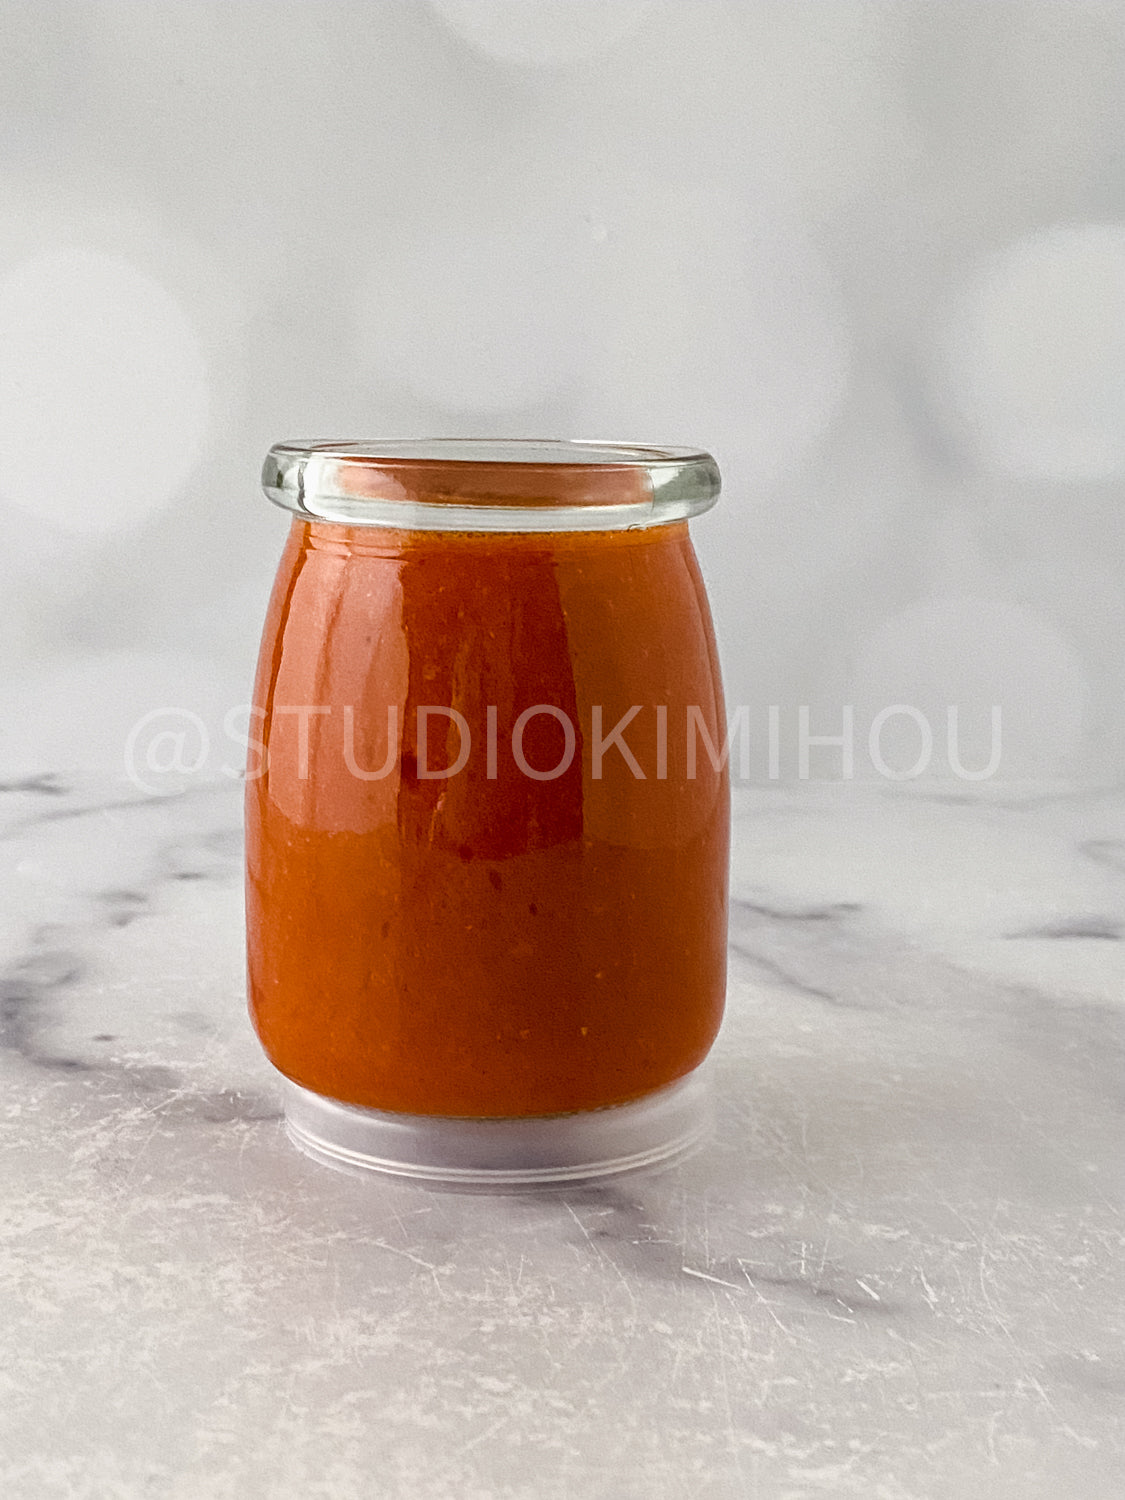 PLR - Buffalo Sauce